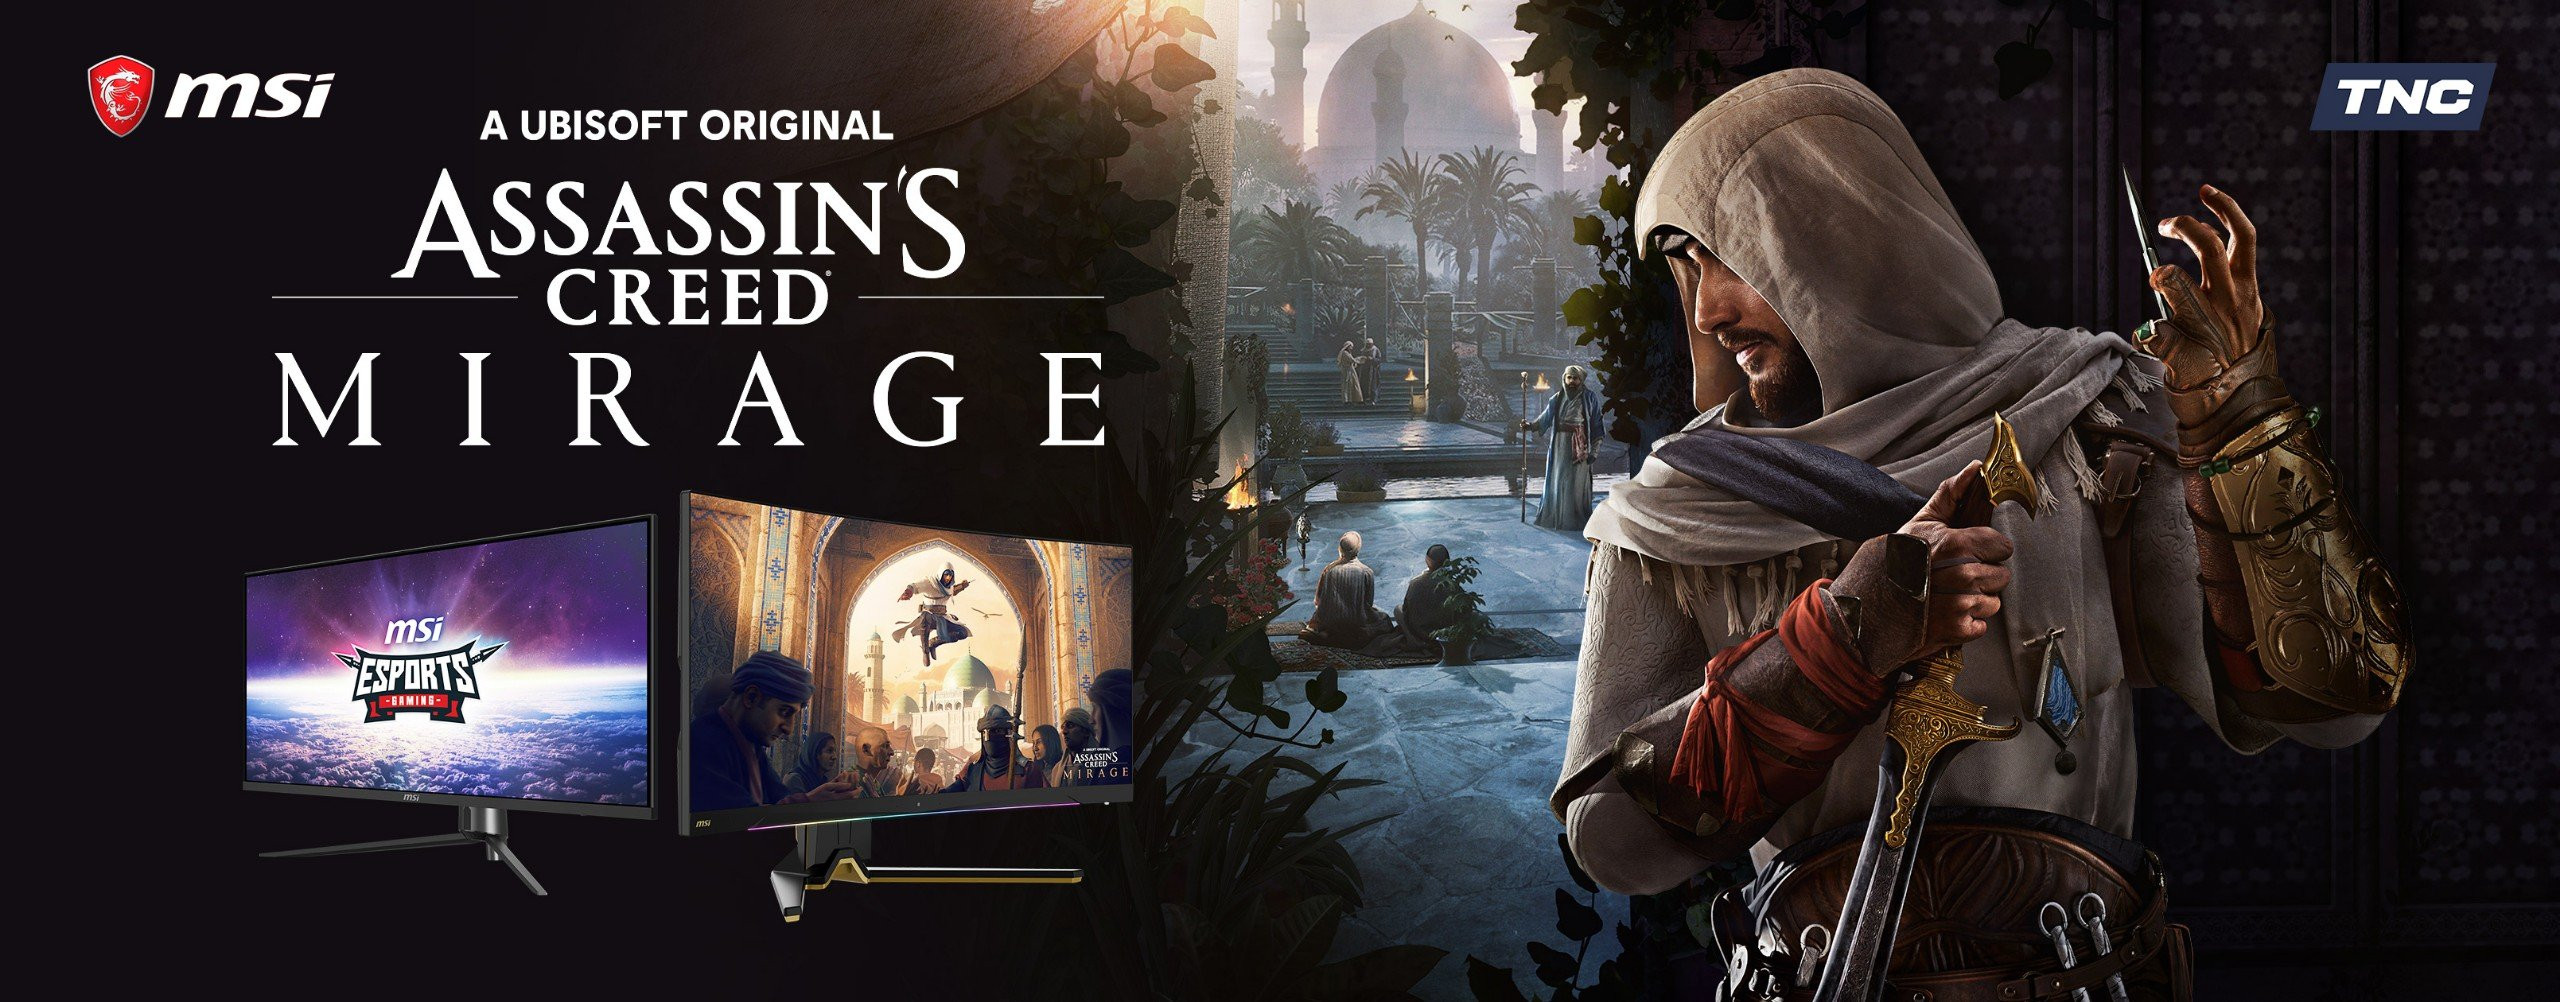 Mua MSI Tặng Game Assassin’s Creed Mirage